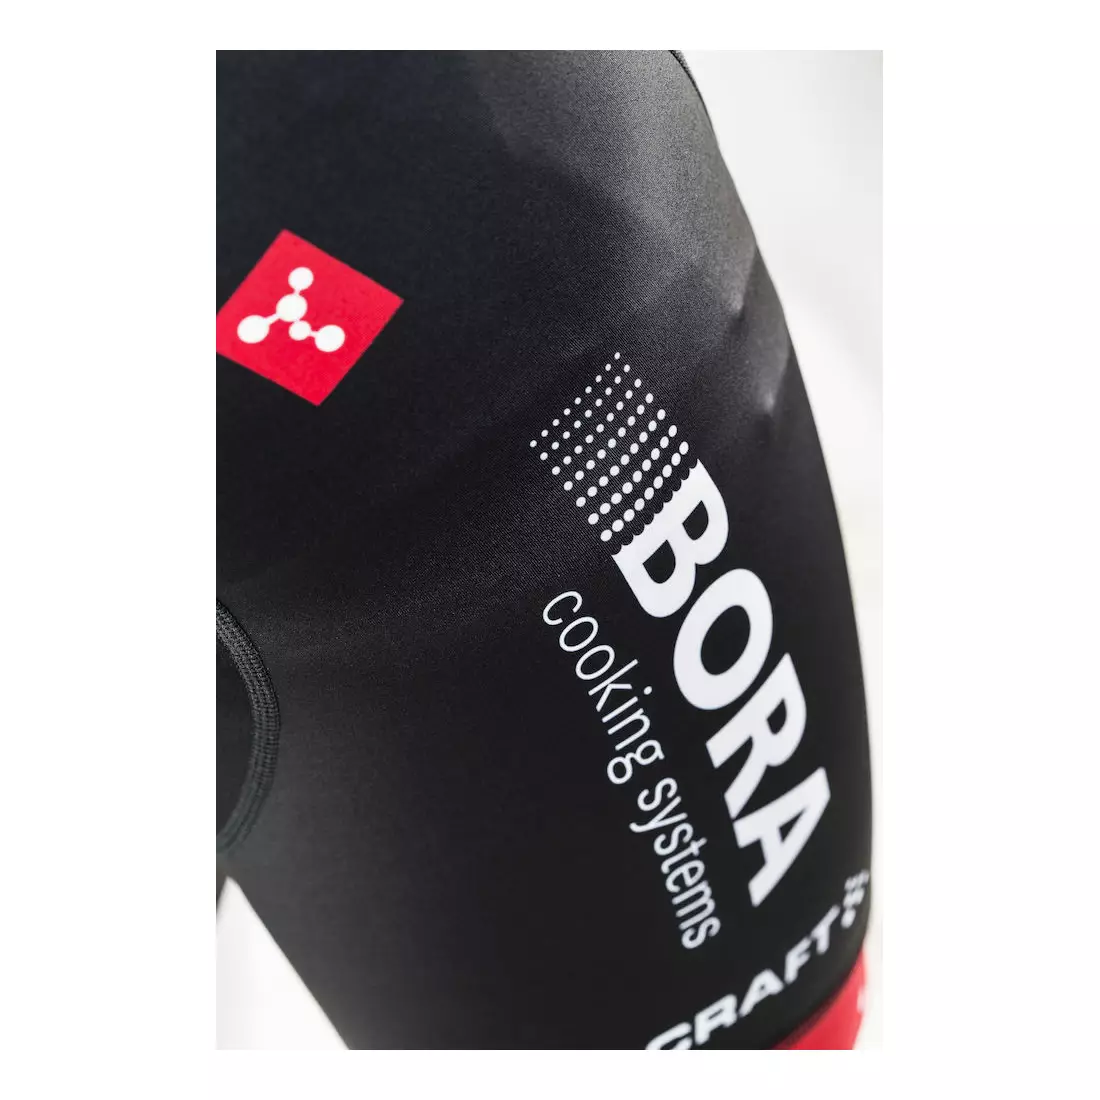 CRAFT BORA ARGON 18 2016 cycling shorts 1904471-9430